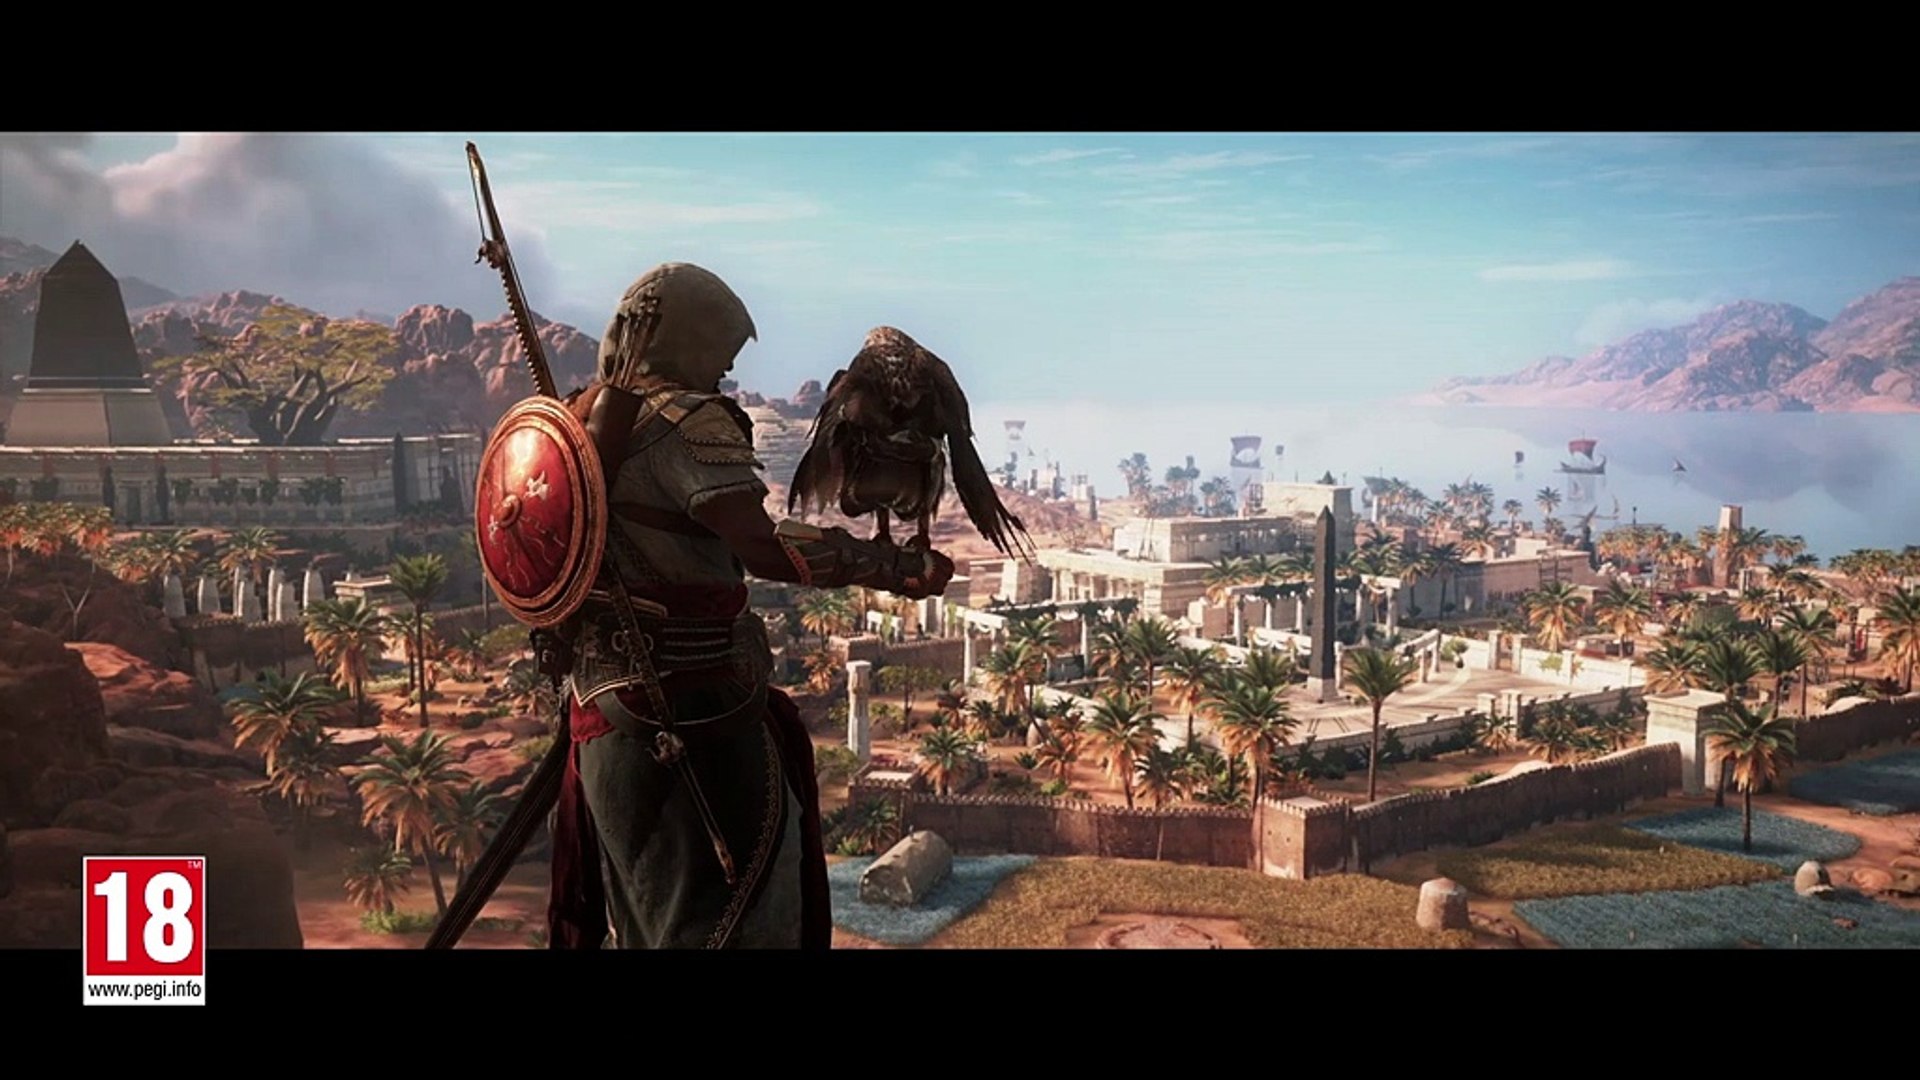 Assassin's Creed Origins - Roman Centurion Pack DLC _ Trailer _ Ubisoft  [US]-_ZIwxMDx8QM - video Dailymotion